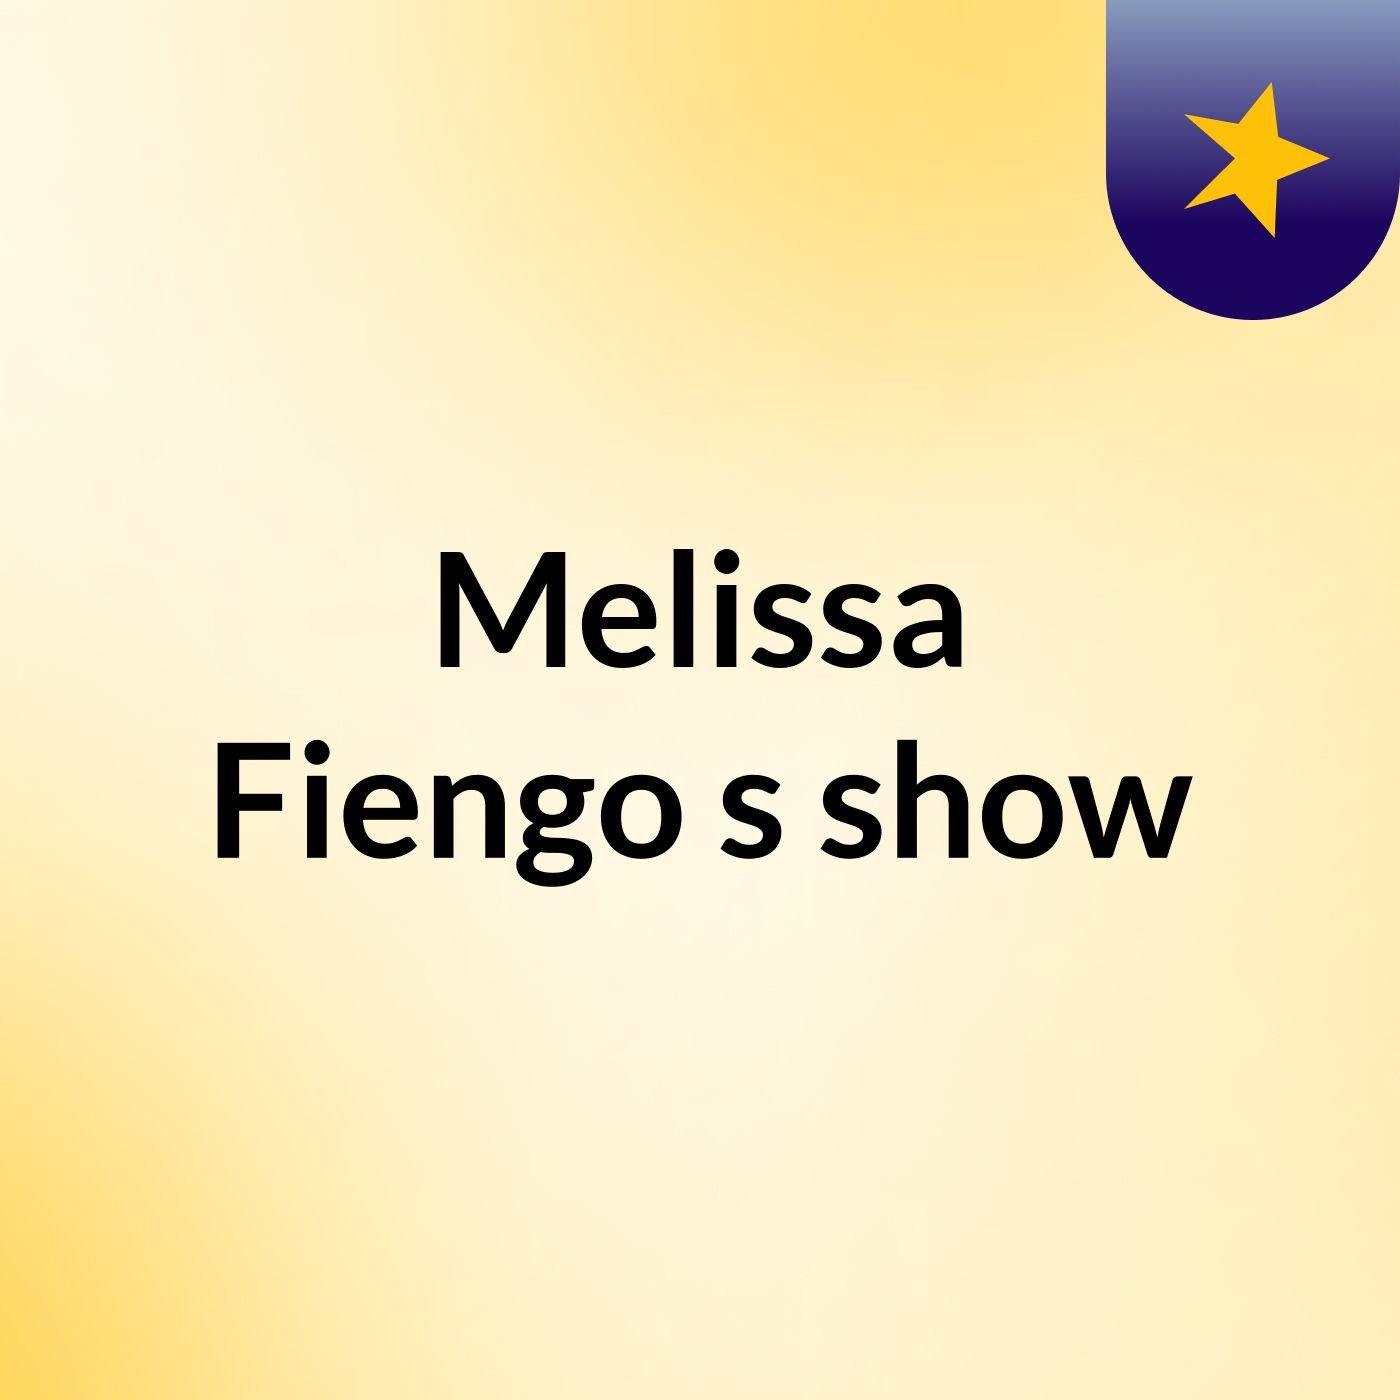 Melissa Fiengo's show